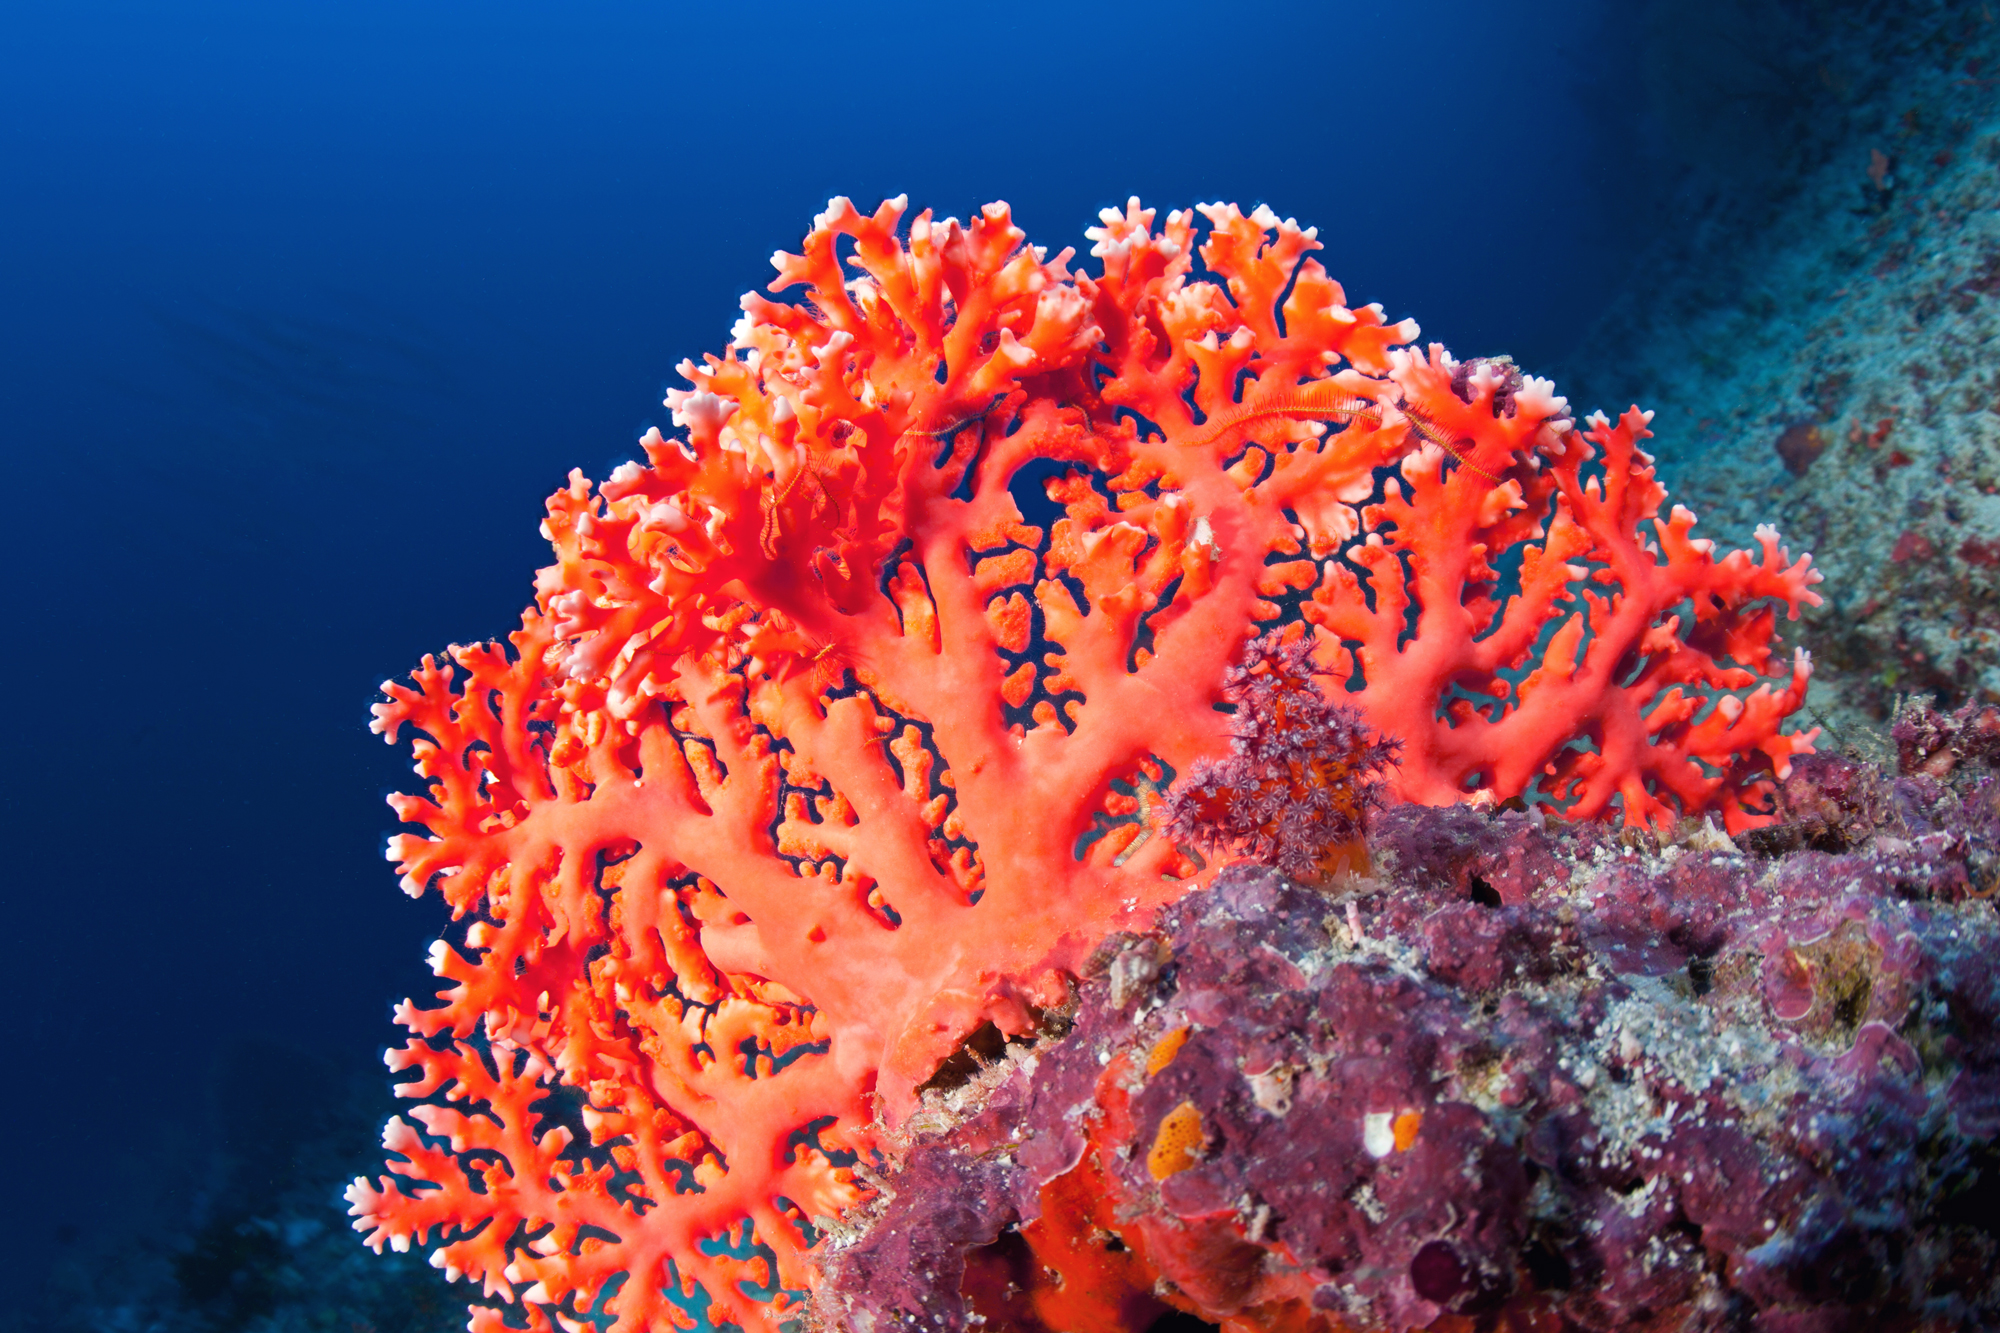 Коралловые рифы образуют. Коралловые полипы рифы. Коралловые полипы в индийском океане. Notocyathus коралл. Коралл Montastraea.